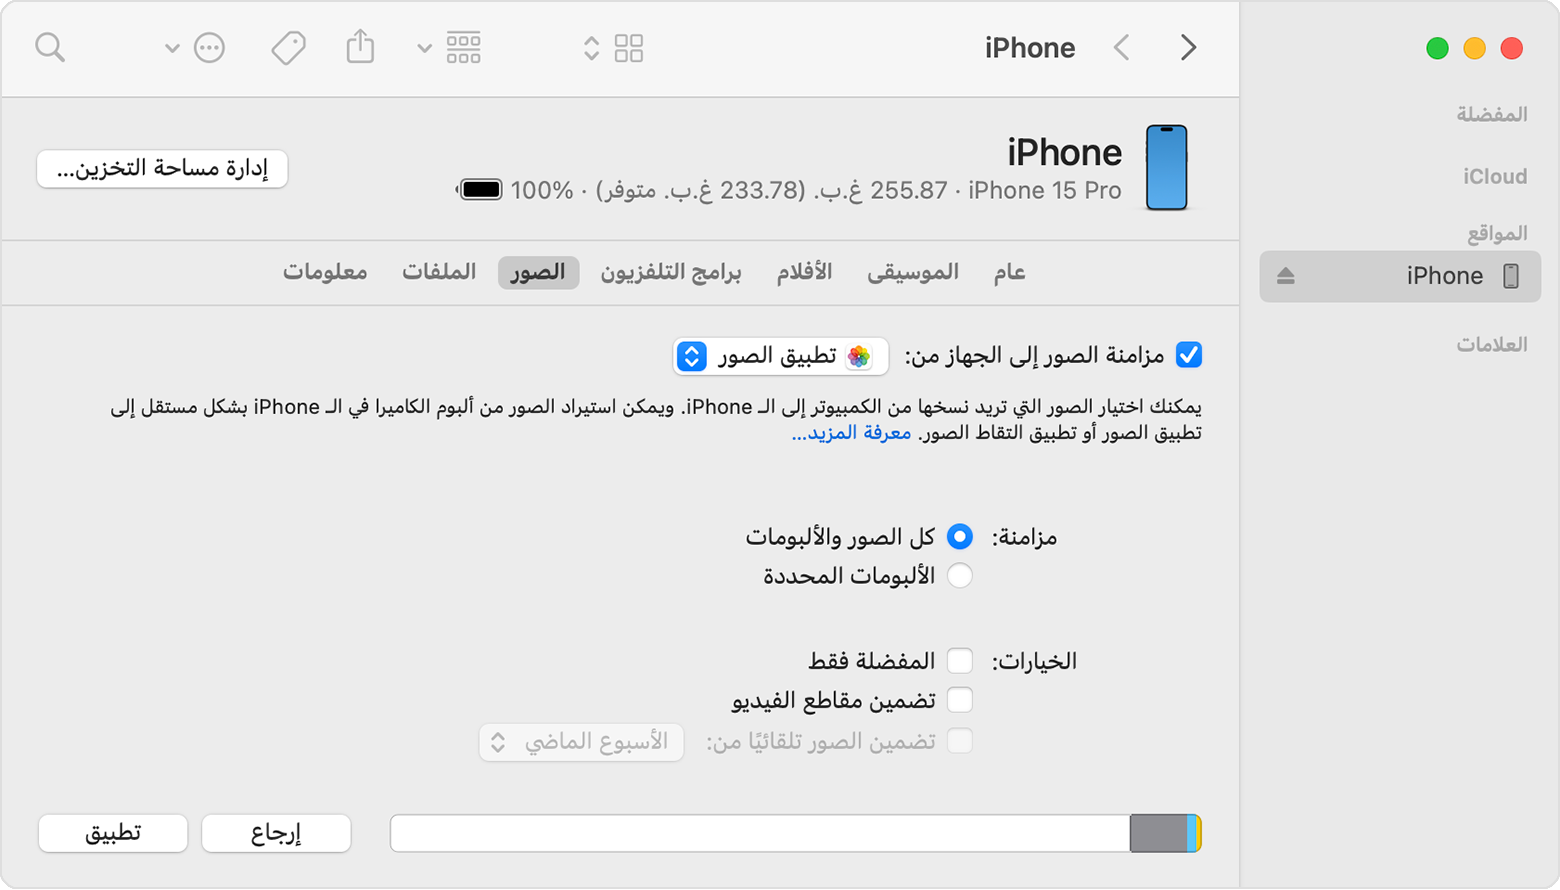 iPhone يعرض خيارًا لمزامنة الصور مع الجهاز من خلال تطبيق "الصور"